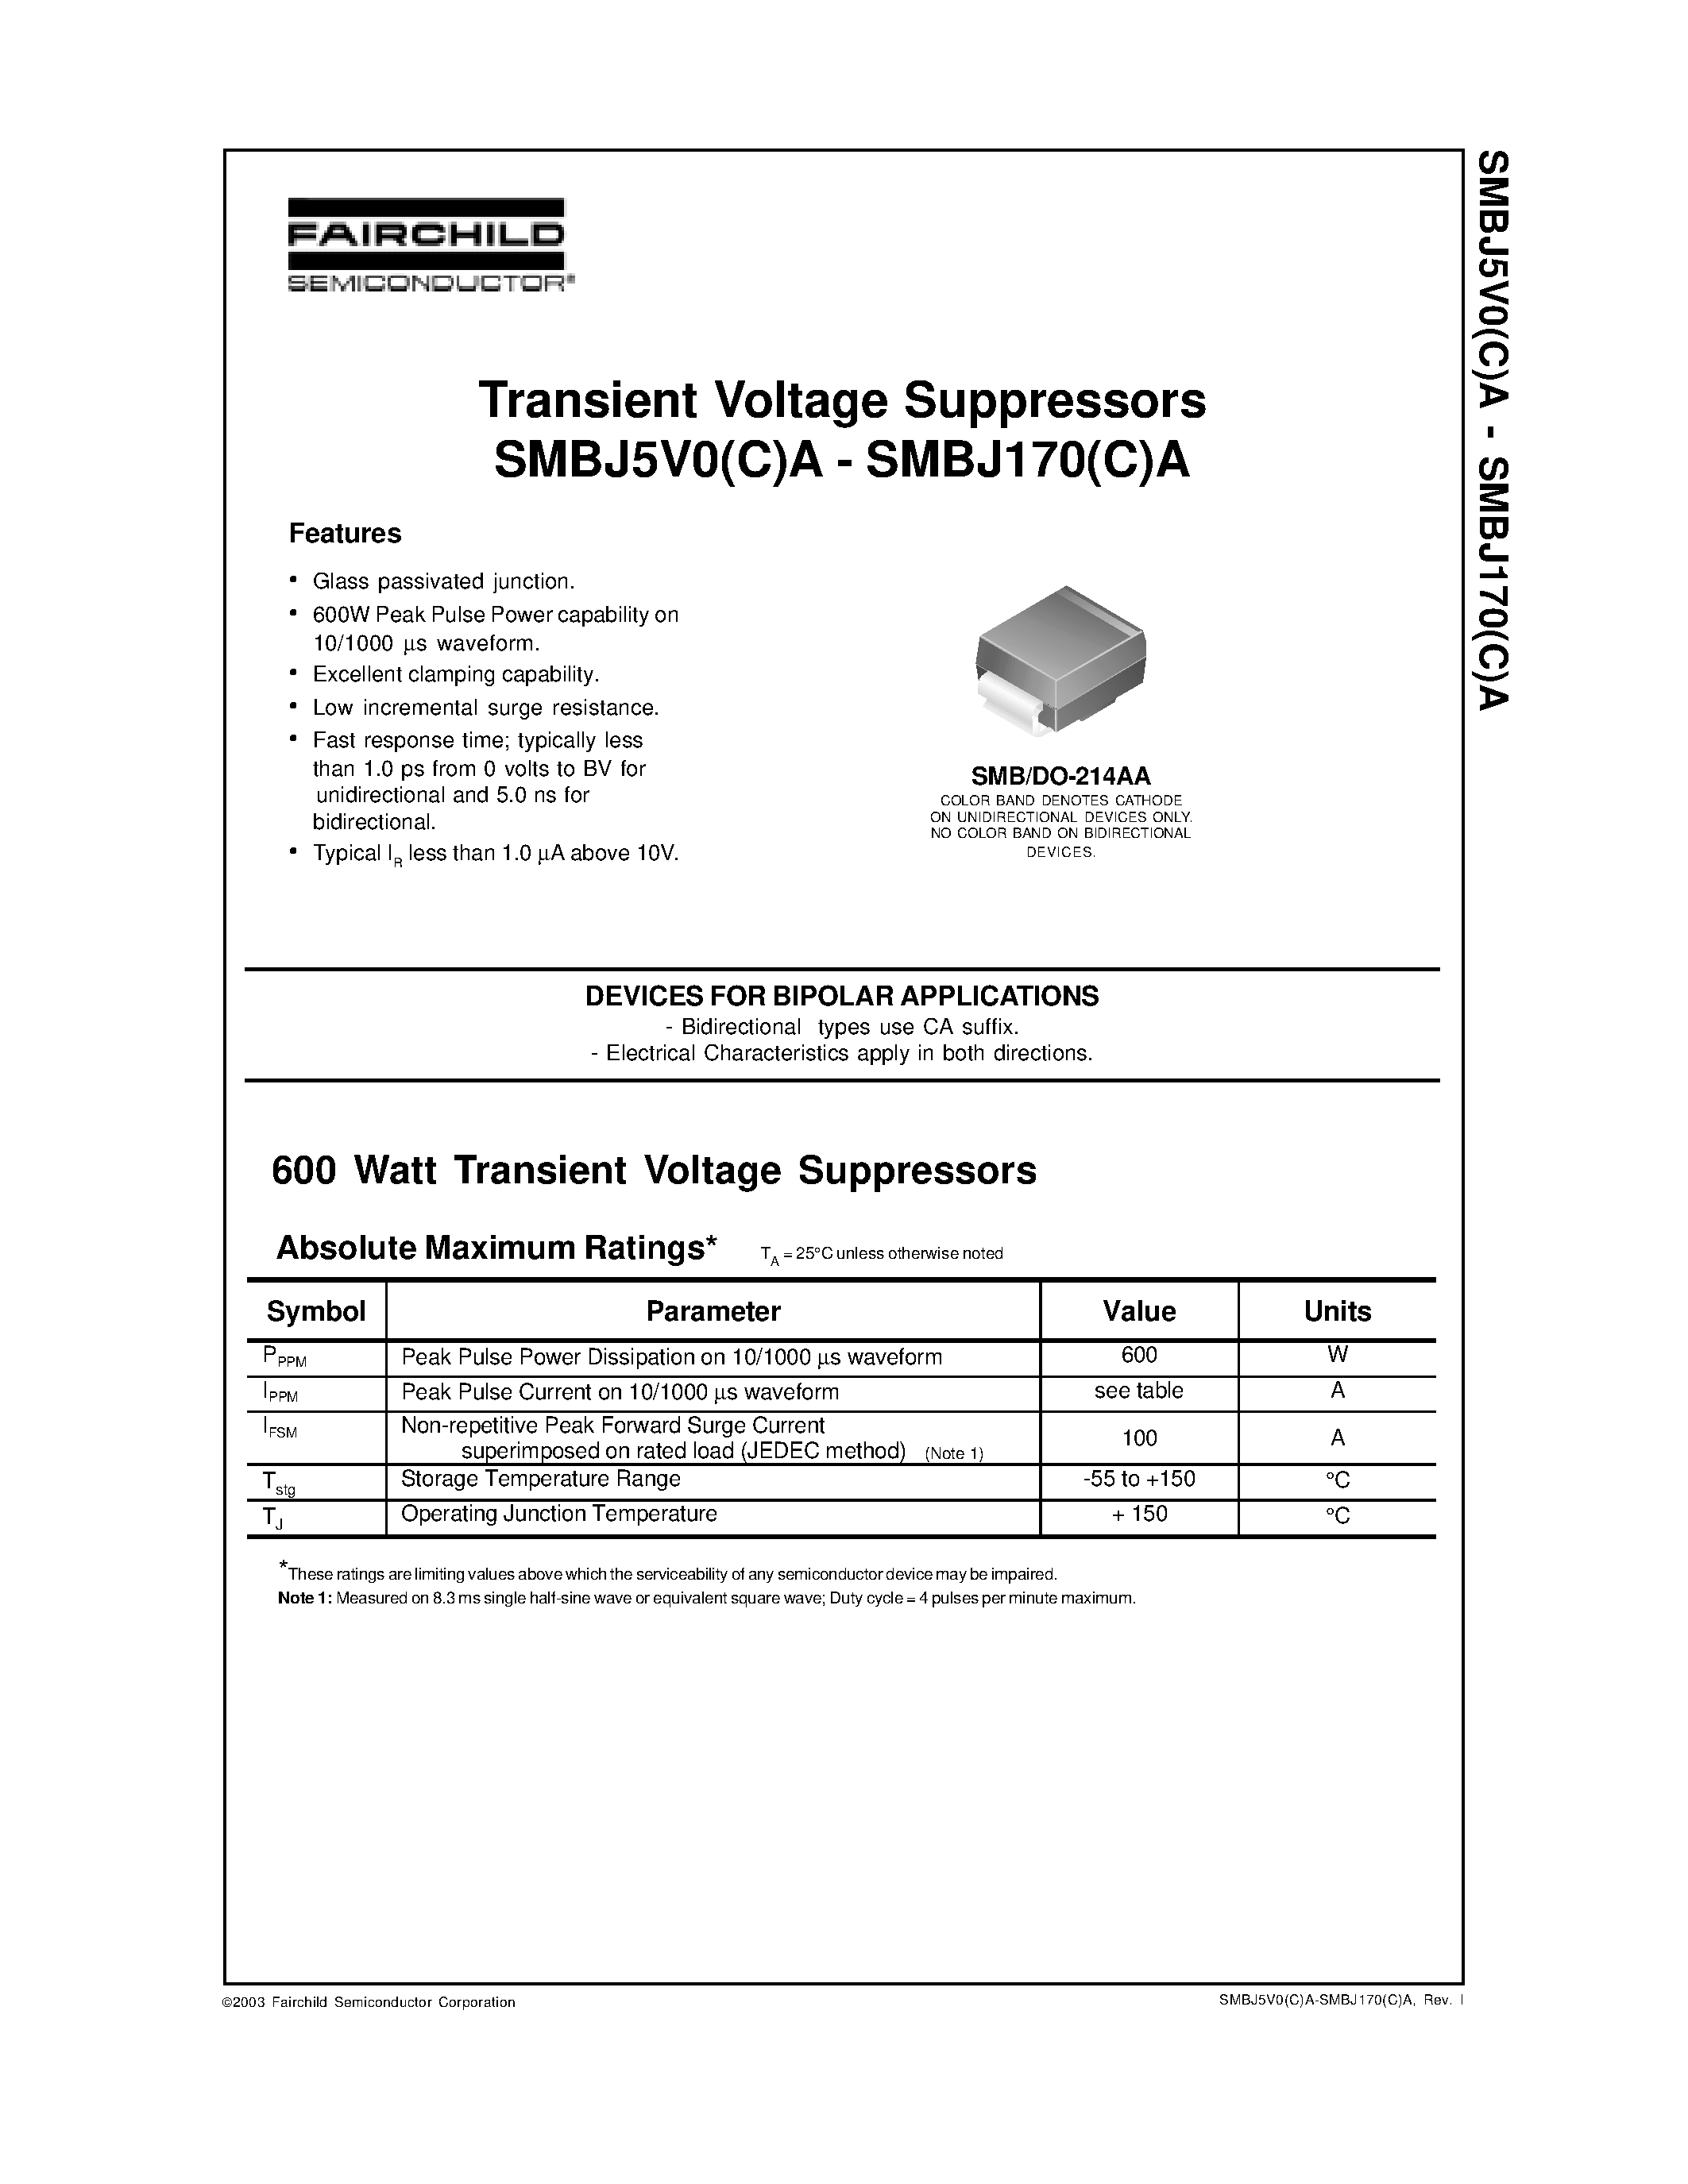 Datasheet SMBJ24A - Transient Voltage Suppressors SMBJ5V0(C)A - SMBJ170(C)A page 1